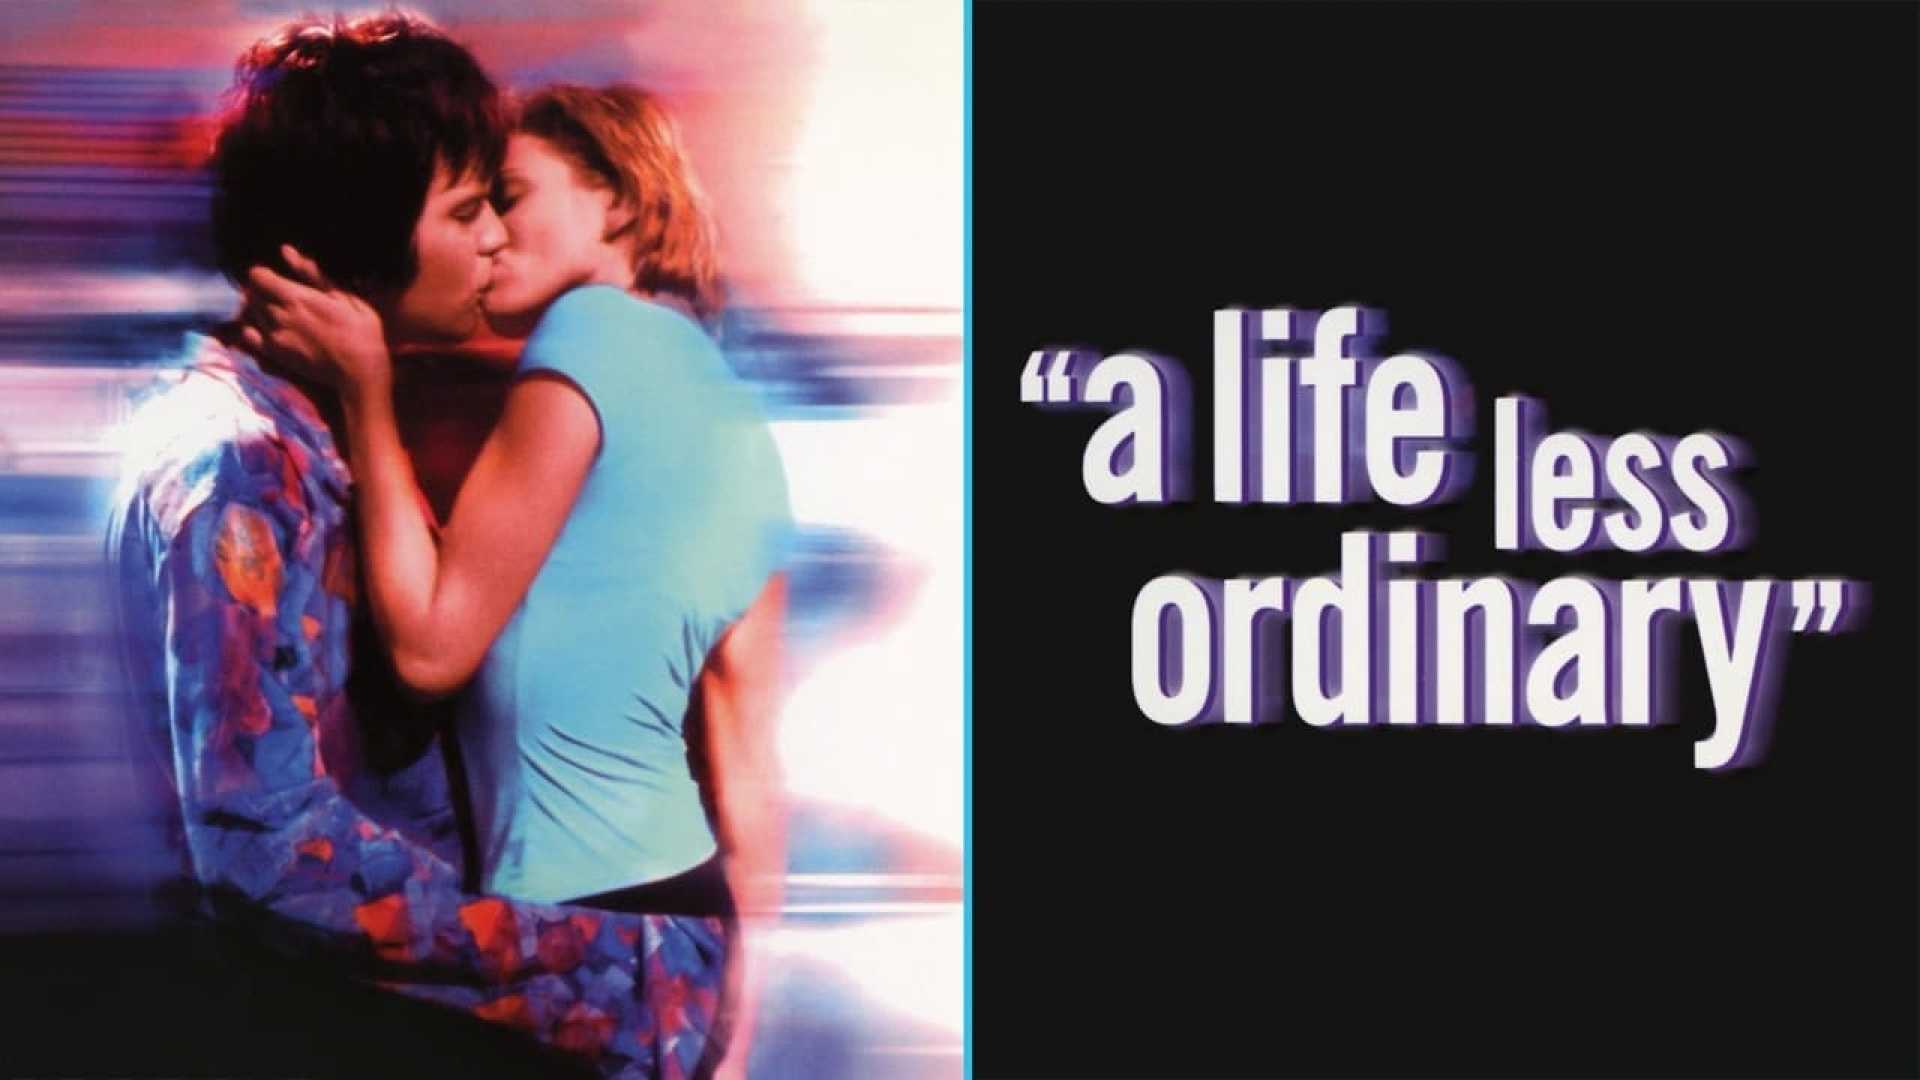 She little life. Менее привычная жизнь (1997). A Life less ordinary. A Life less ordinary 1997 Promo.